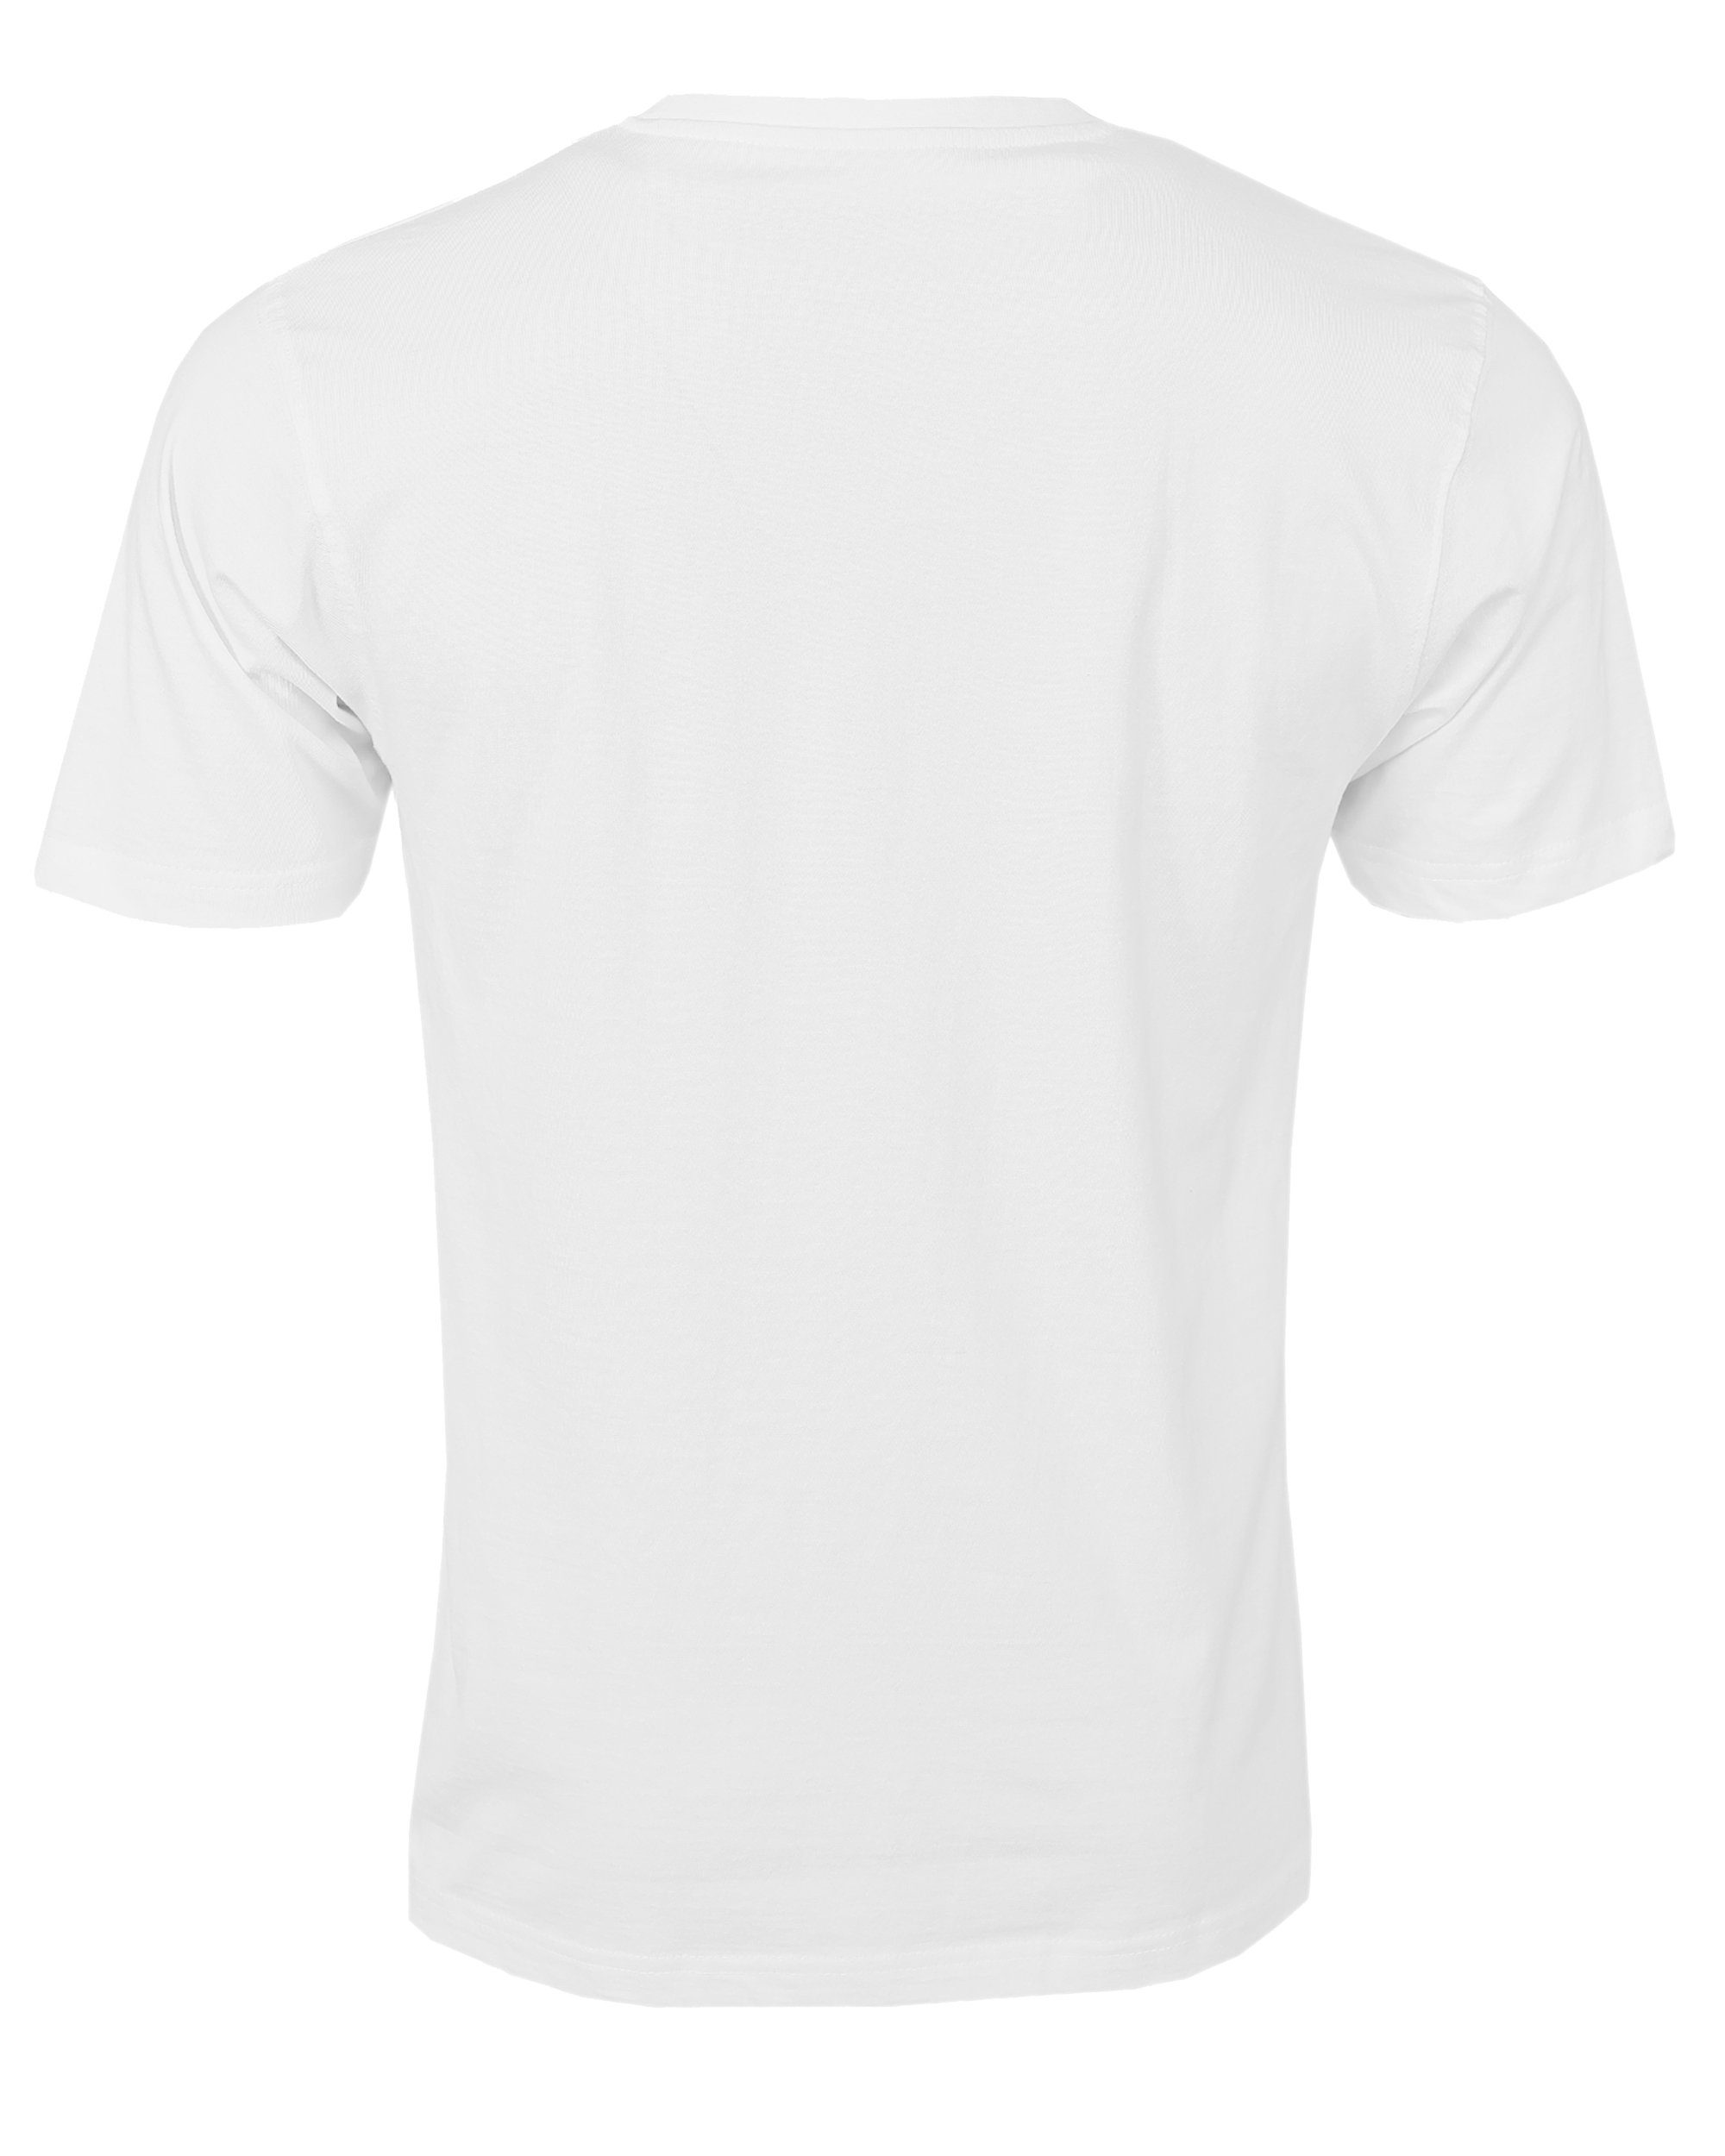 white TOP T-Shirt TG20213030 GUN